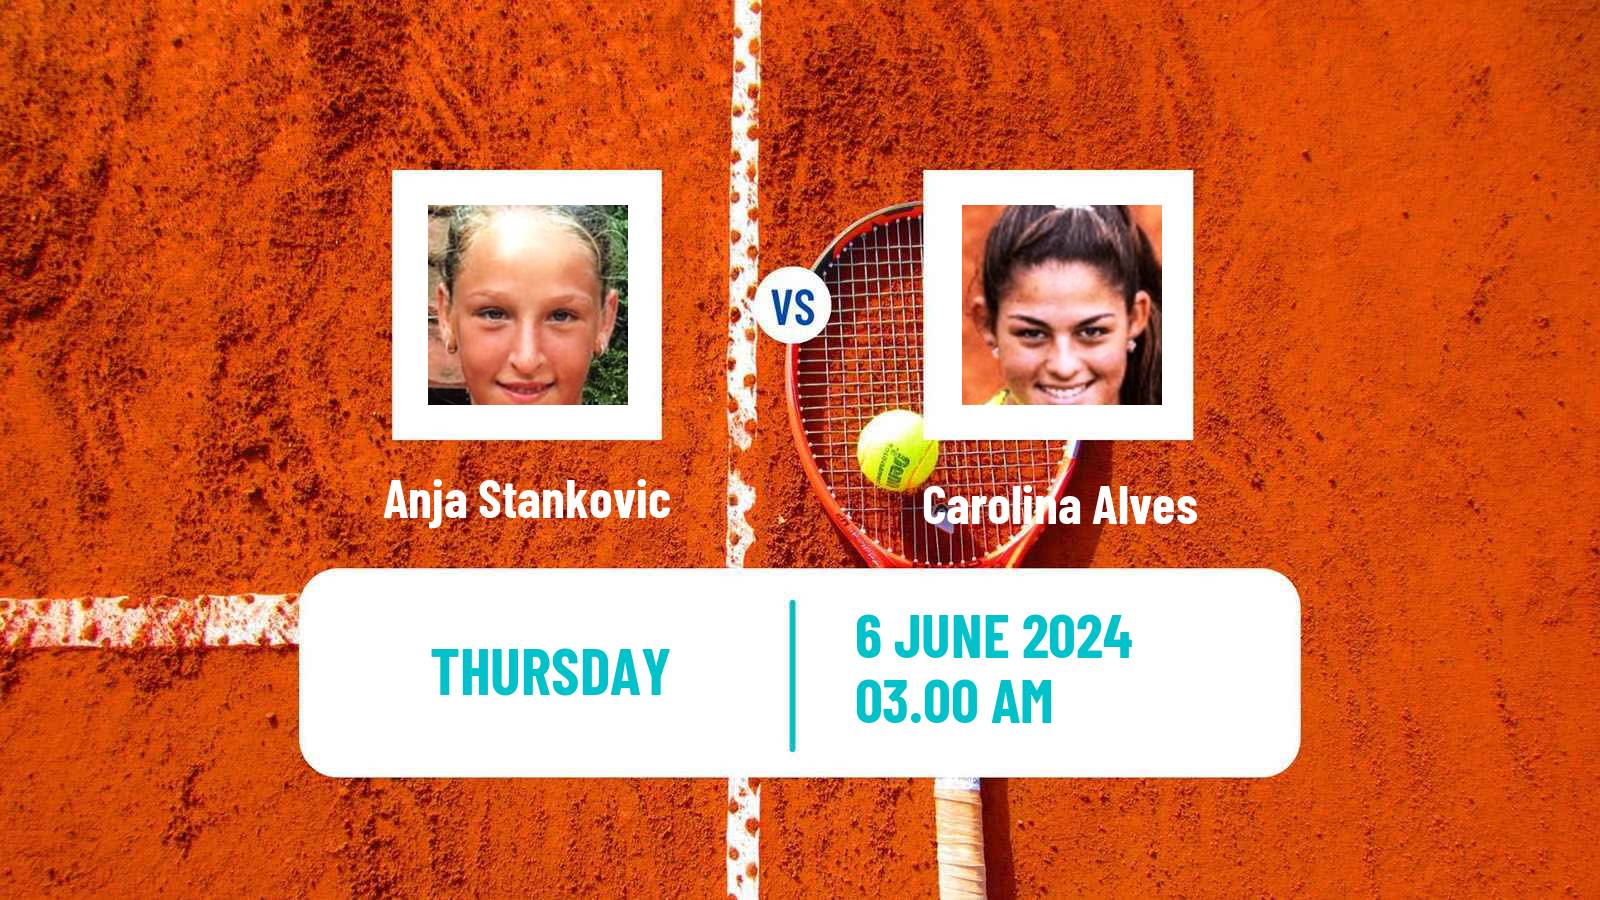 Tennis ITF W35 Kursumlijska Banja 2 Women Anja Stankovic - Carolina Alves